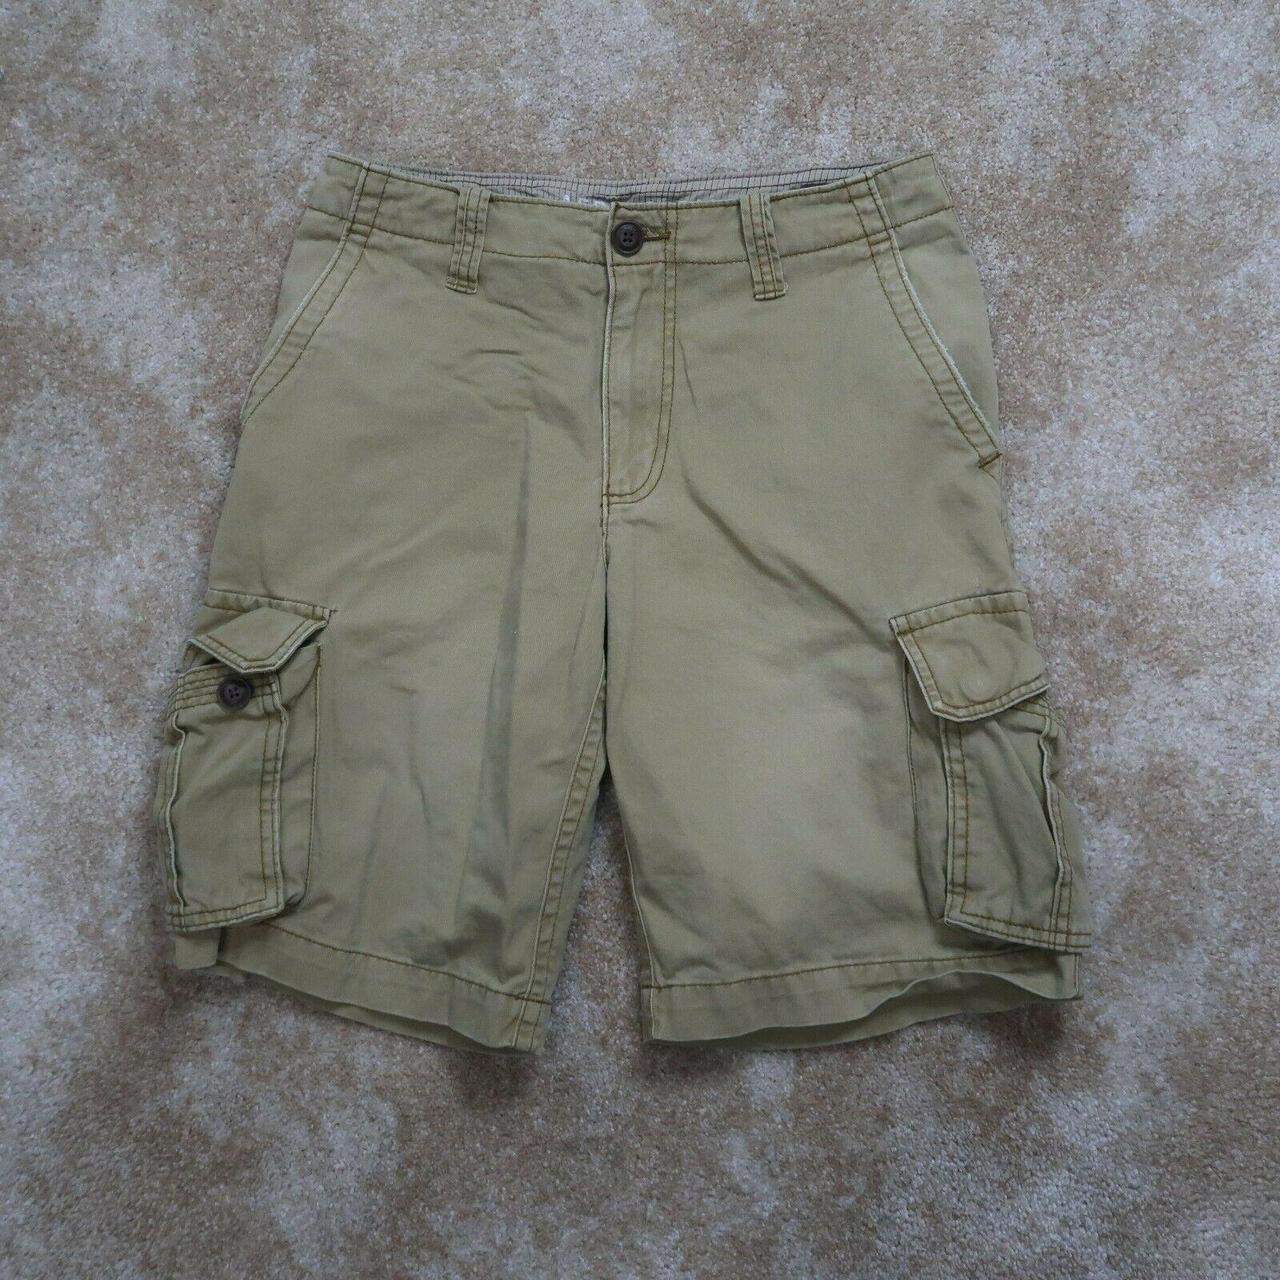 Product Image 1 - Aeropostale Cargo Shorts tan Men's